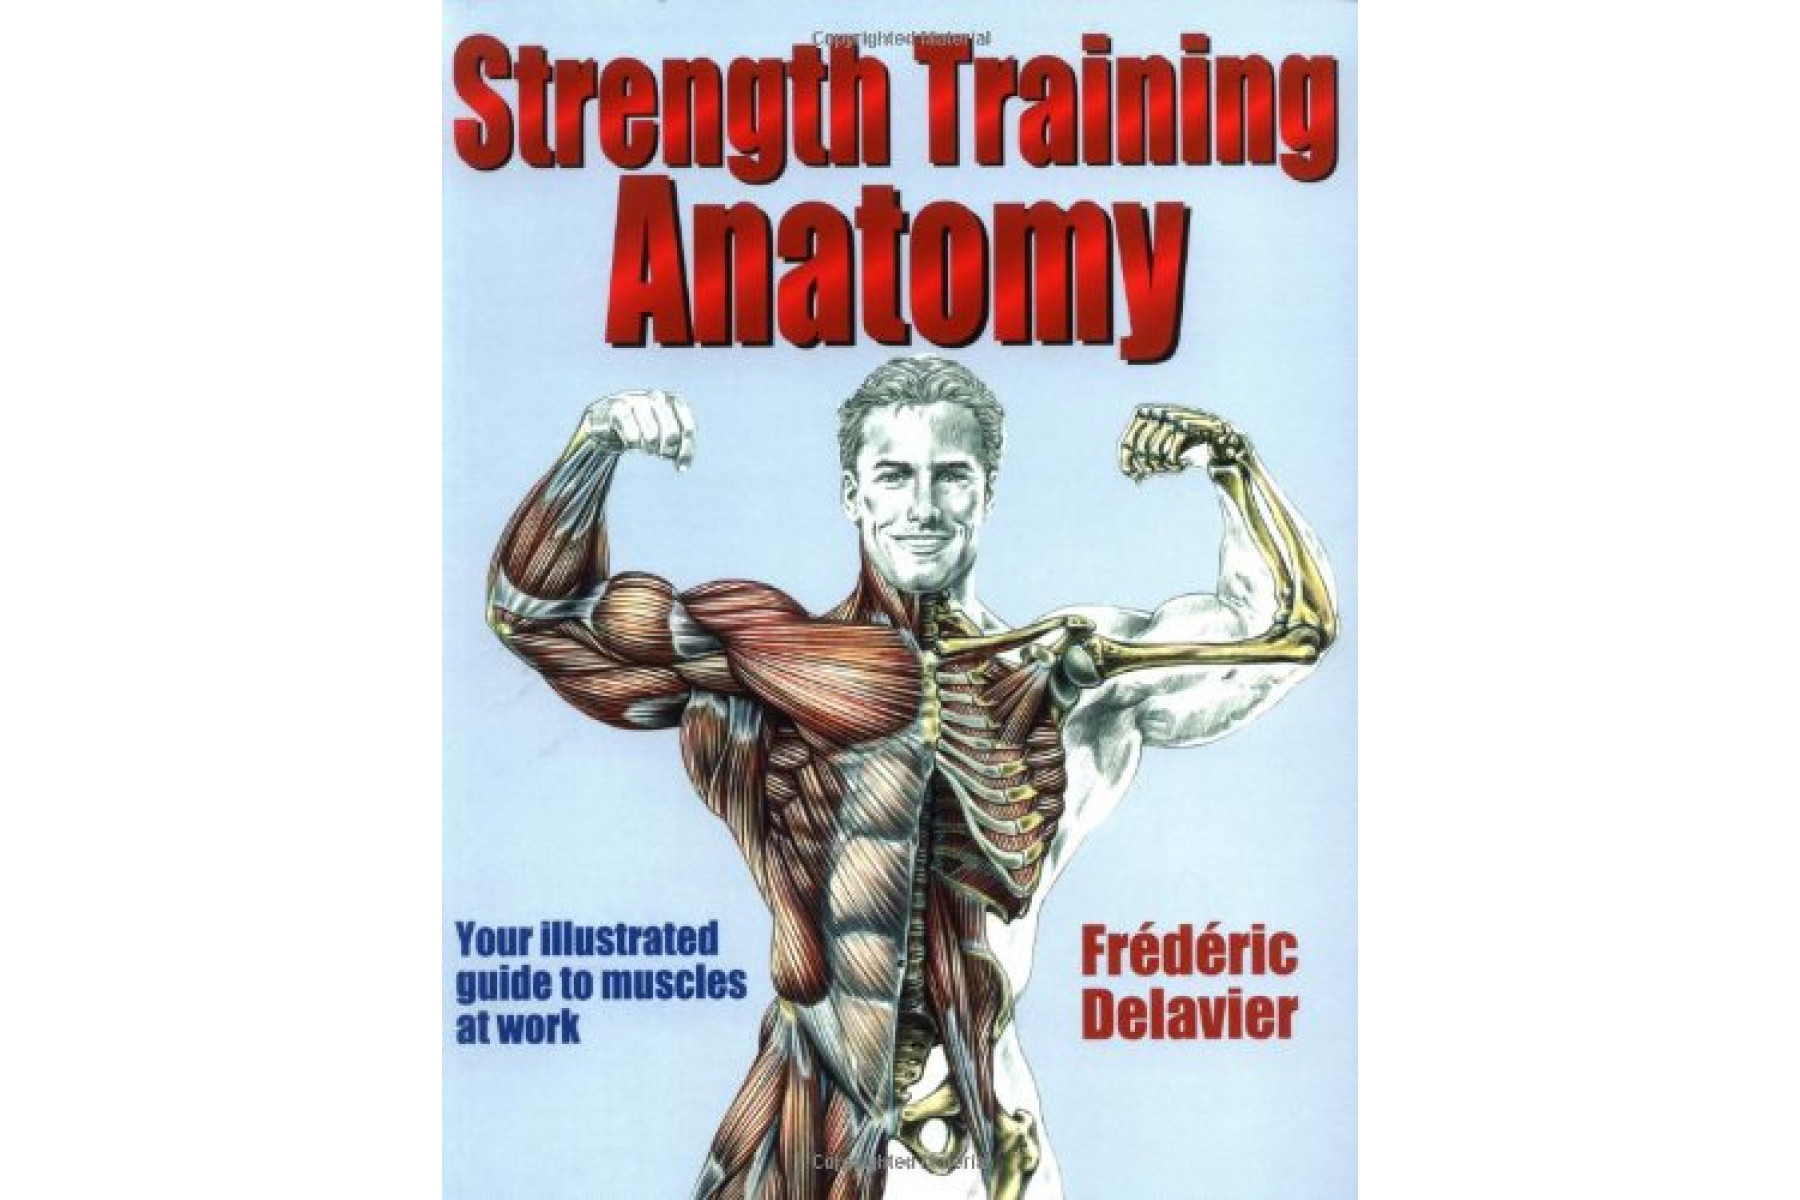 Strength training anatomy